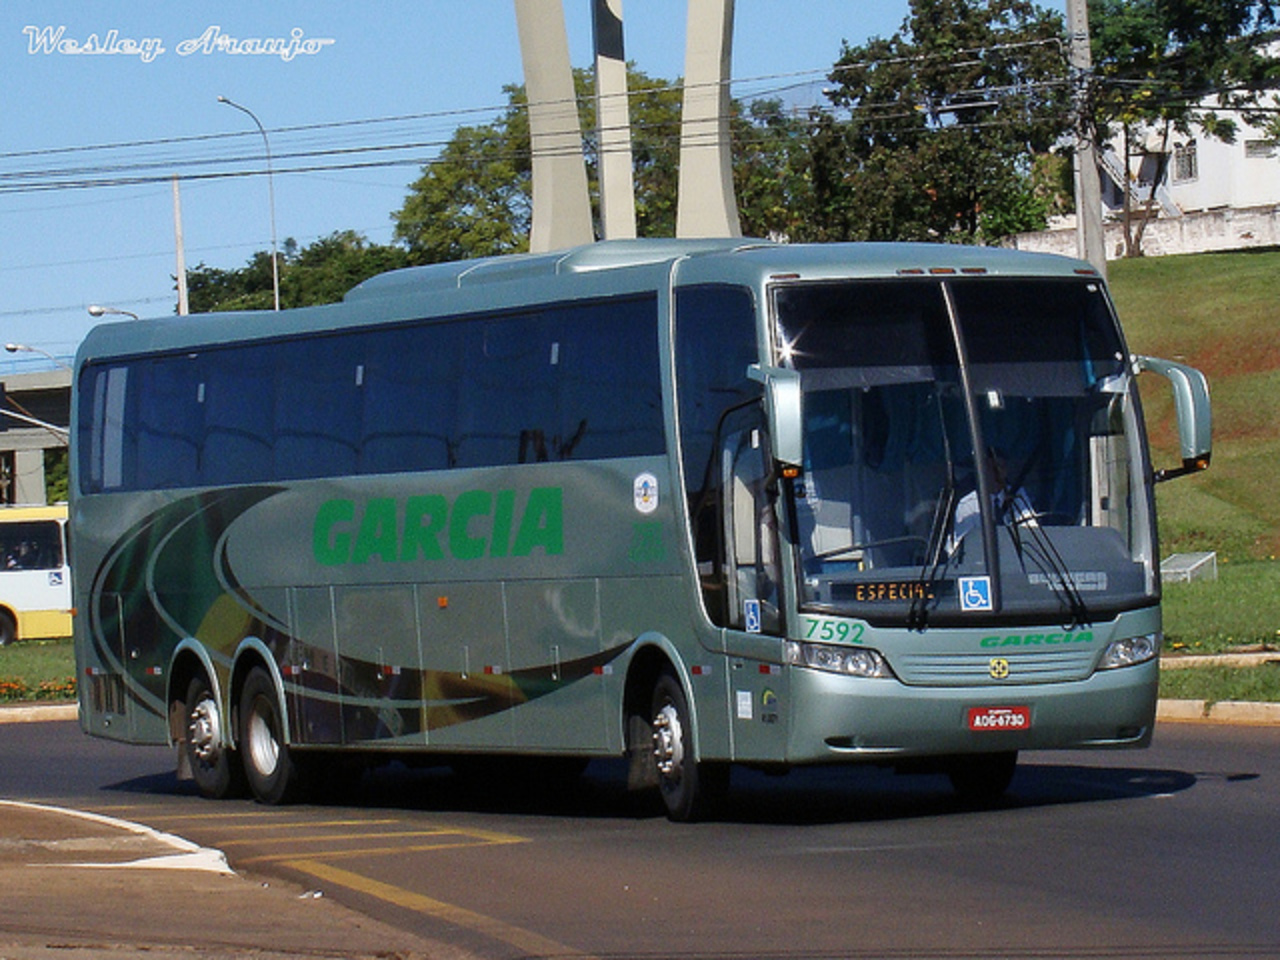 ViaÃ§Ã£o Garcia 7592 - Busscar Vissta Buss HI MB O-500RSD | Flickr ...